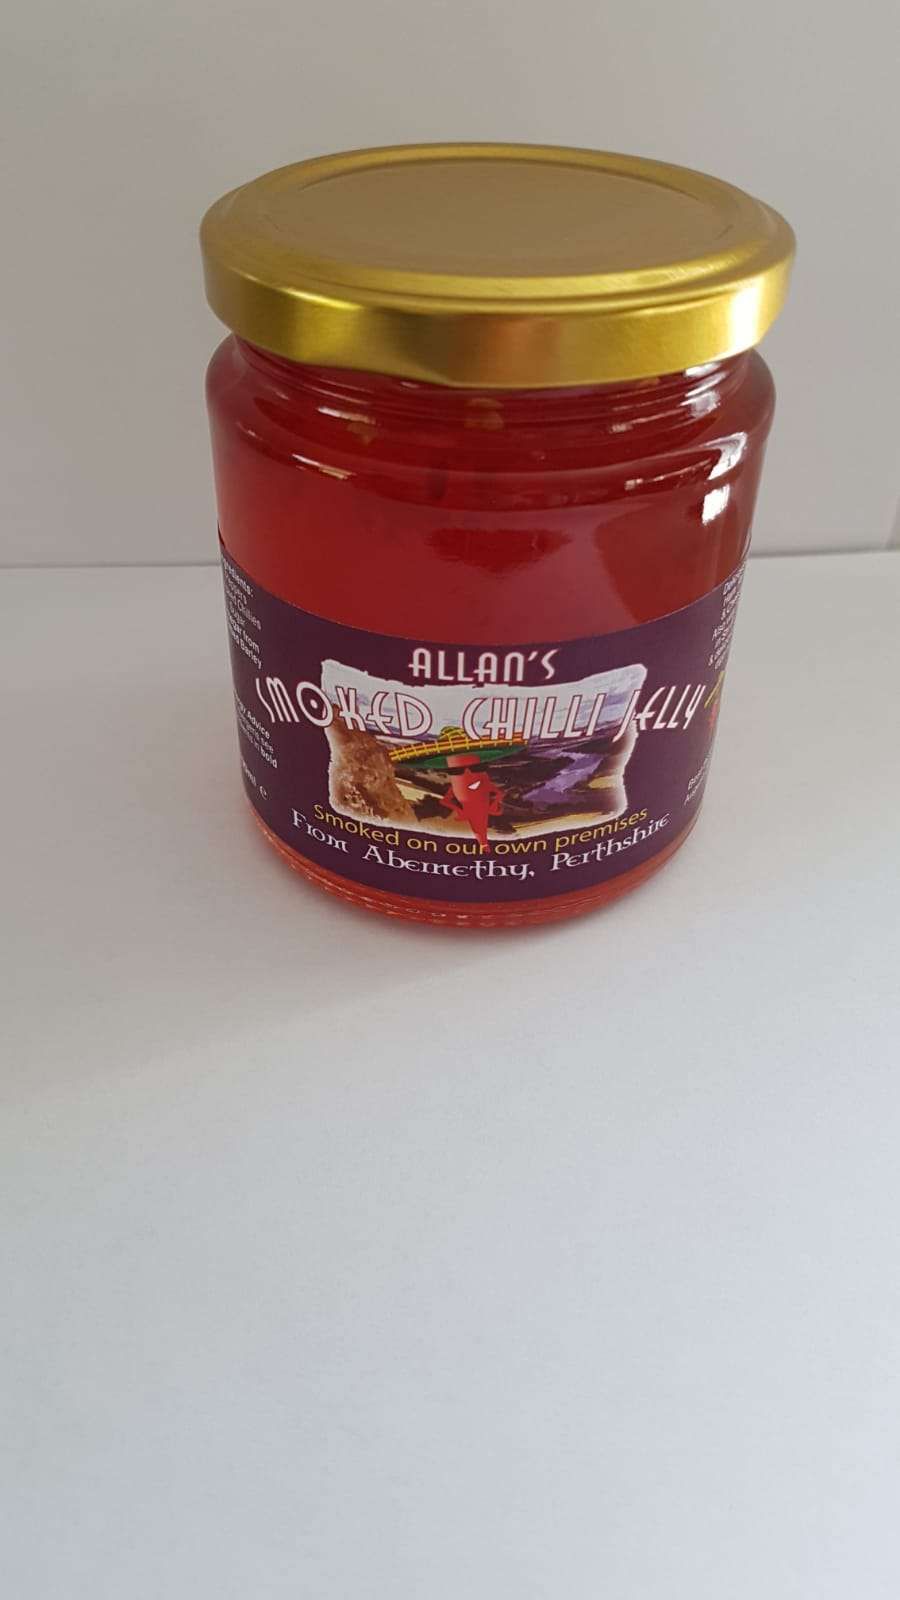 Allan's Smoked Chilli Jelly